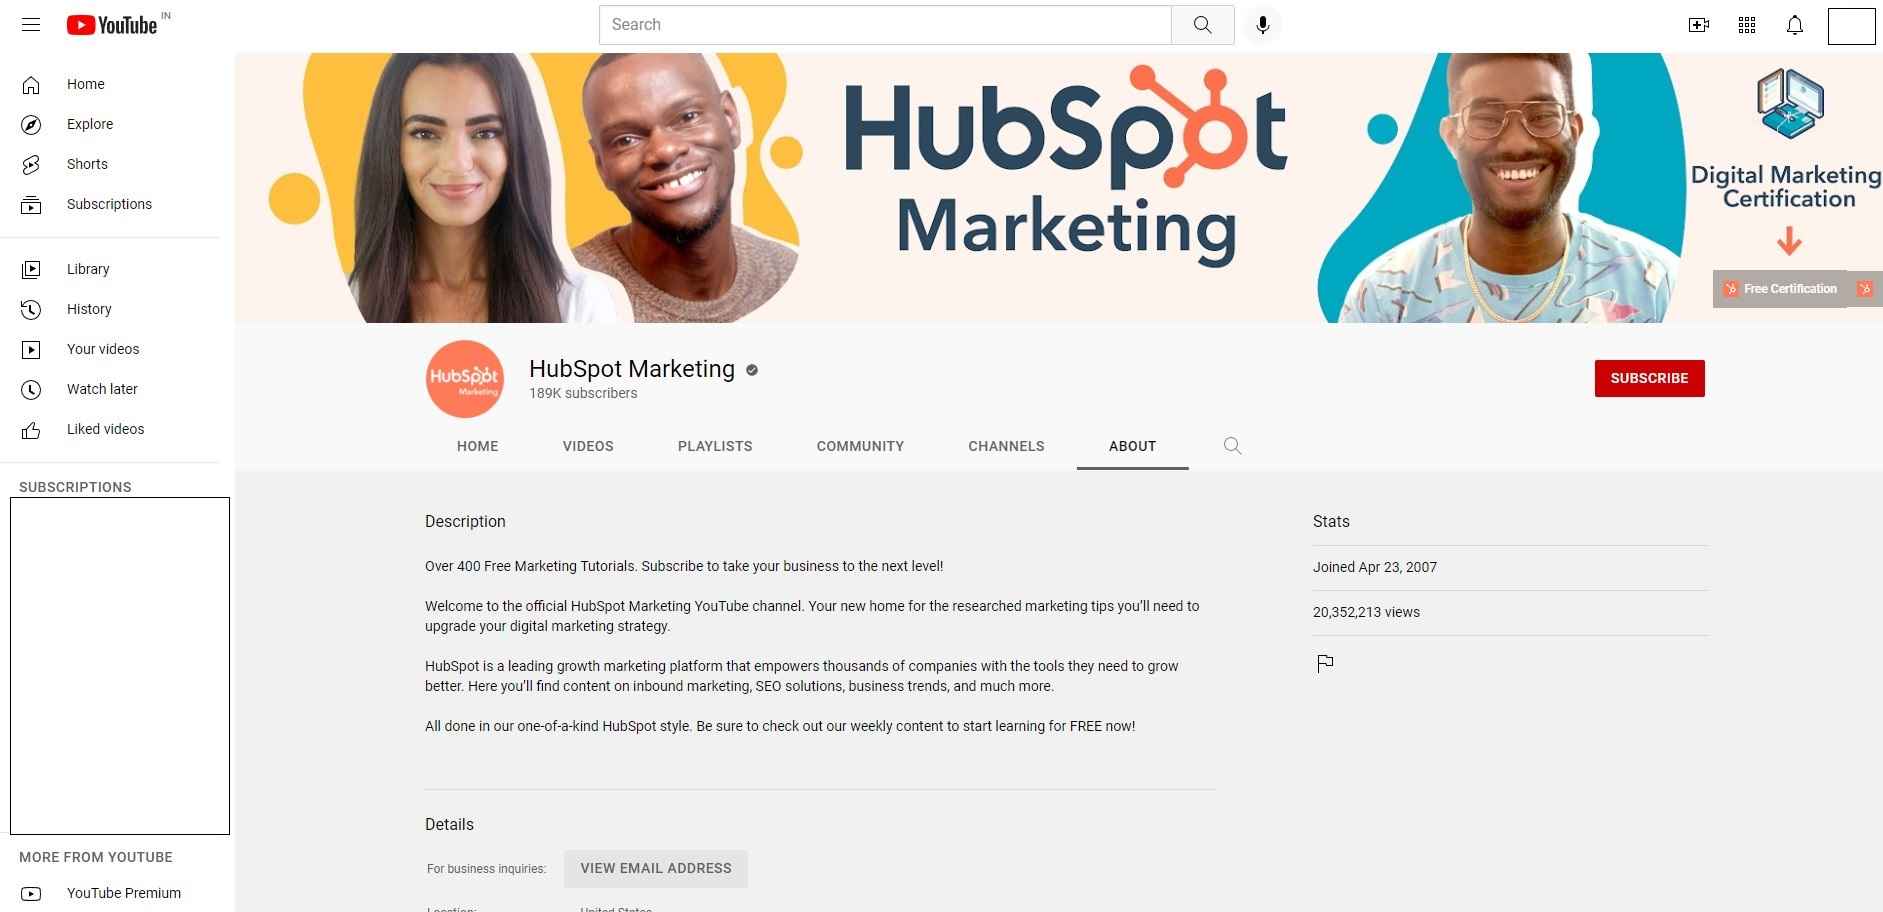 HubSpot Marketing YouTube channel